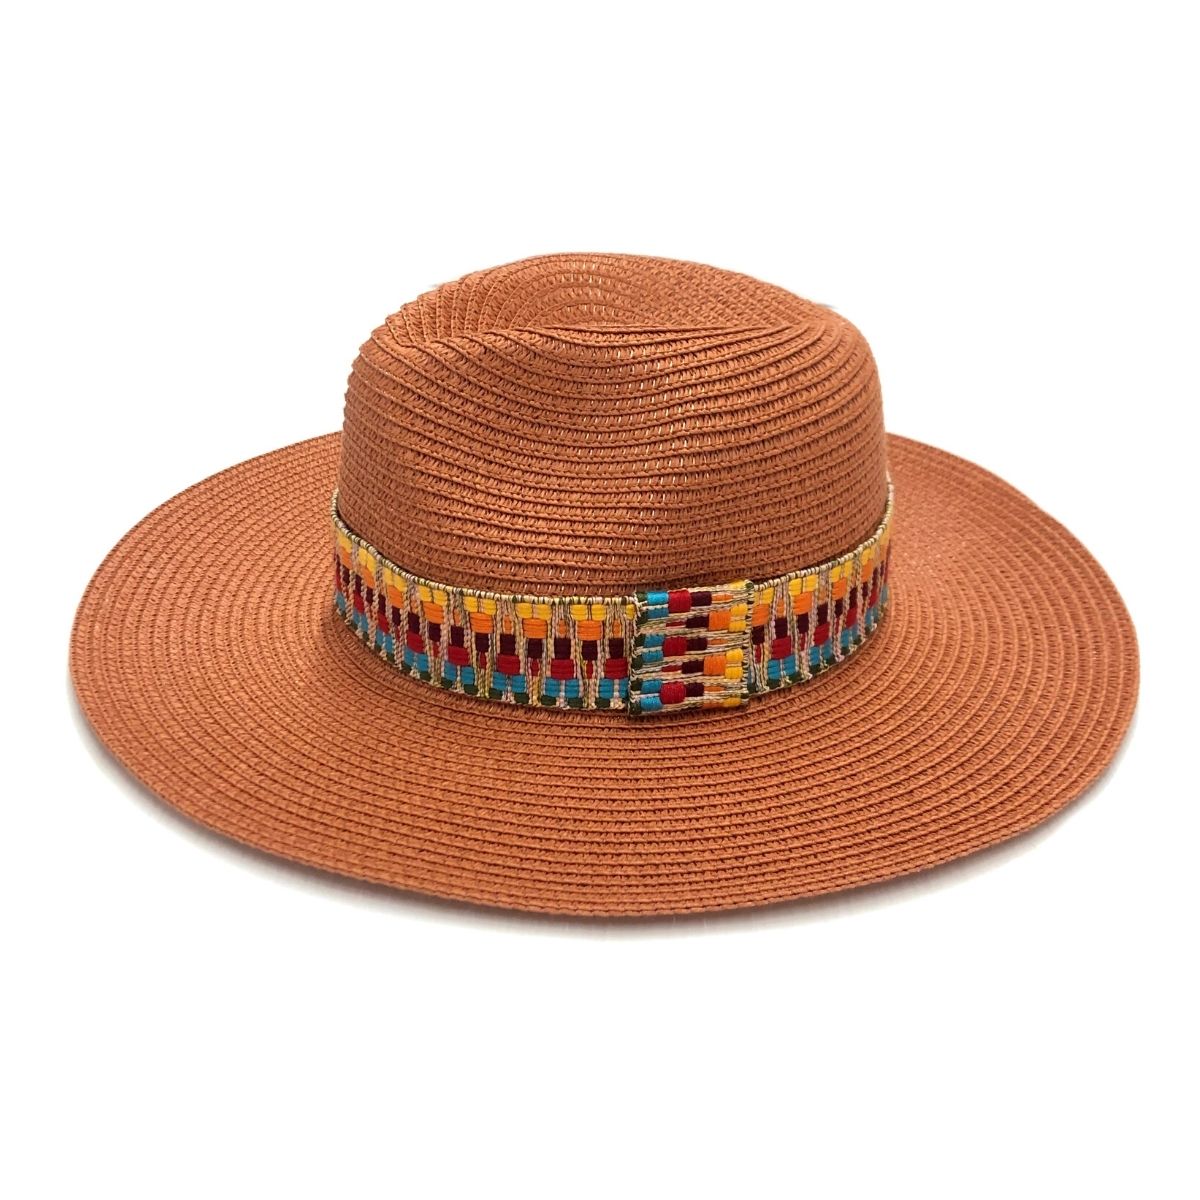 Rust Aztec Band Panama Hat